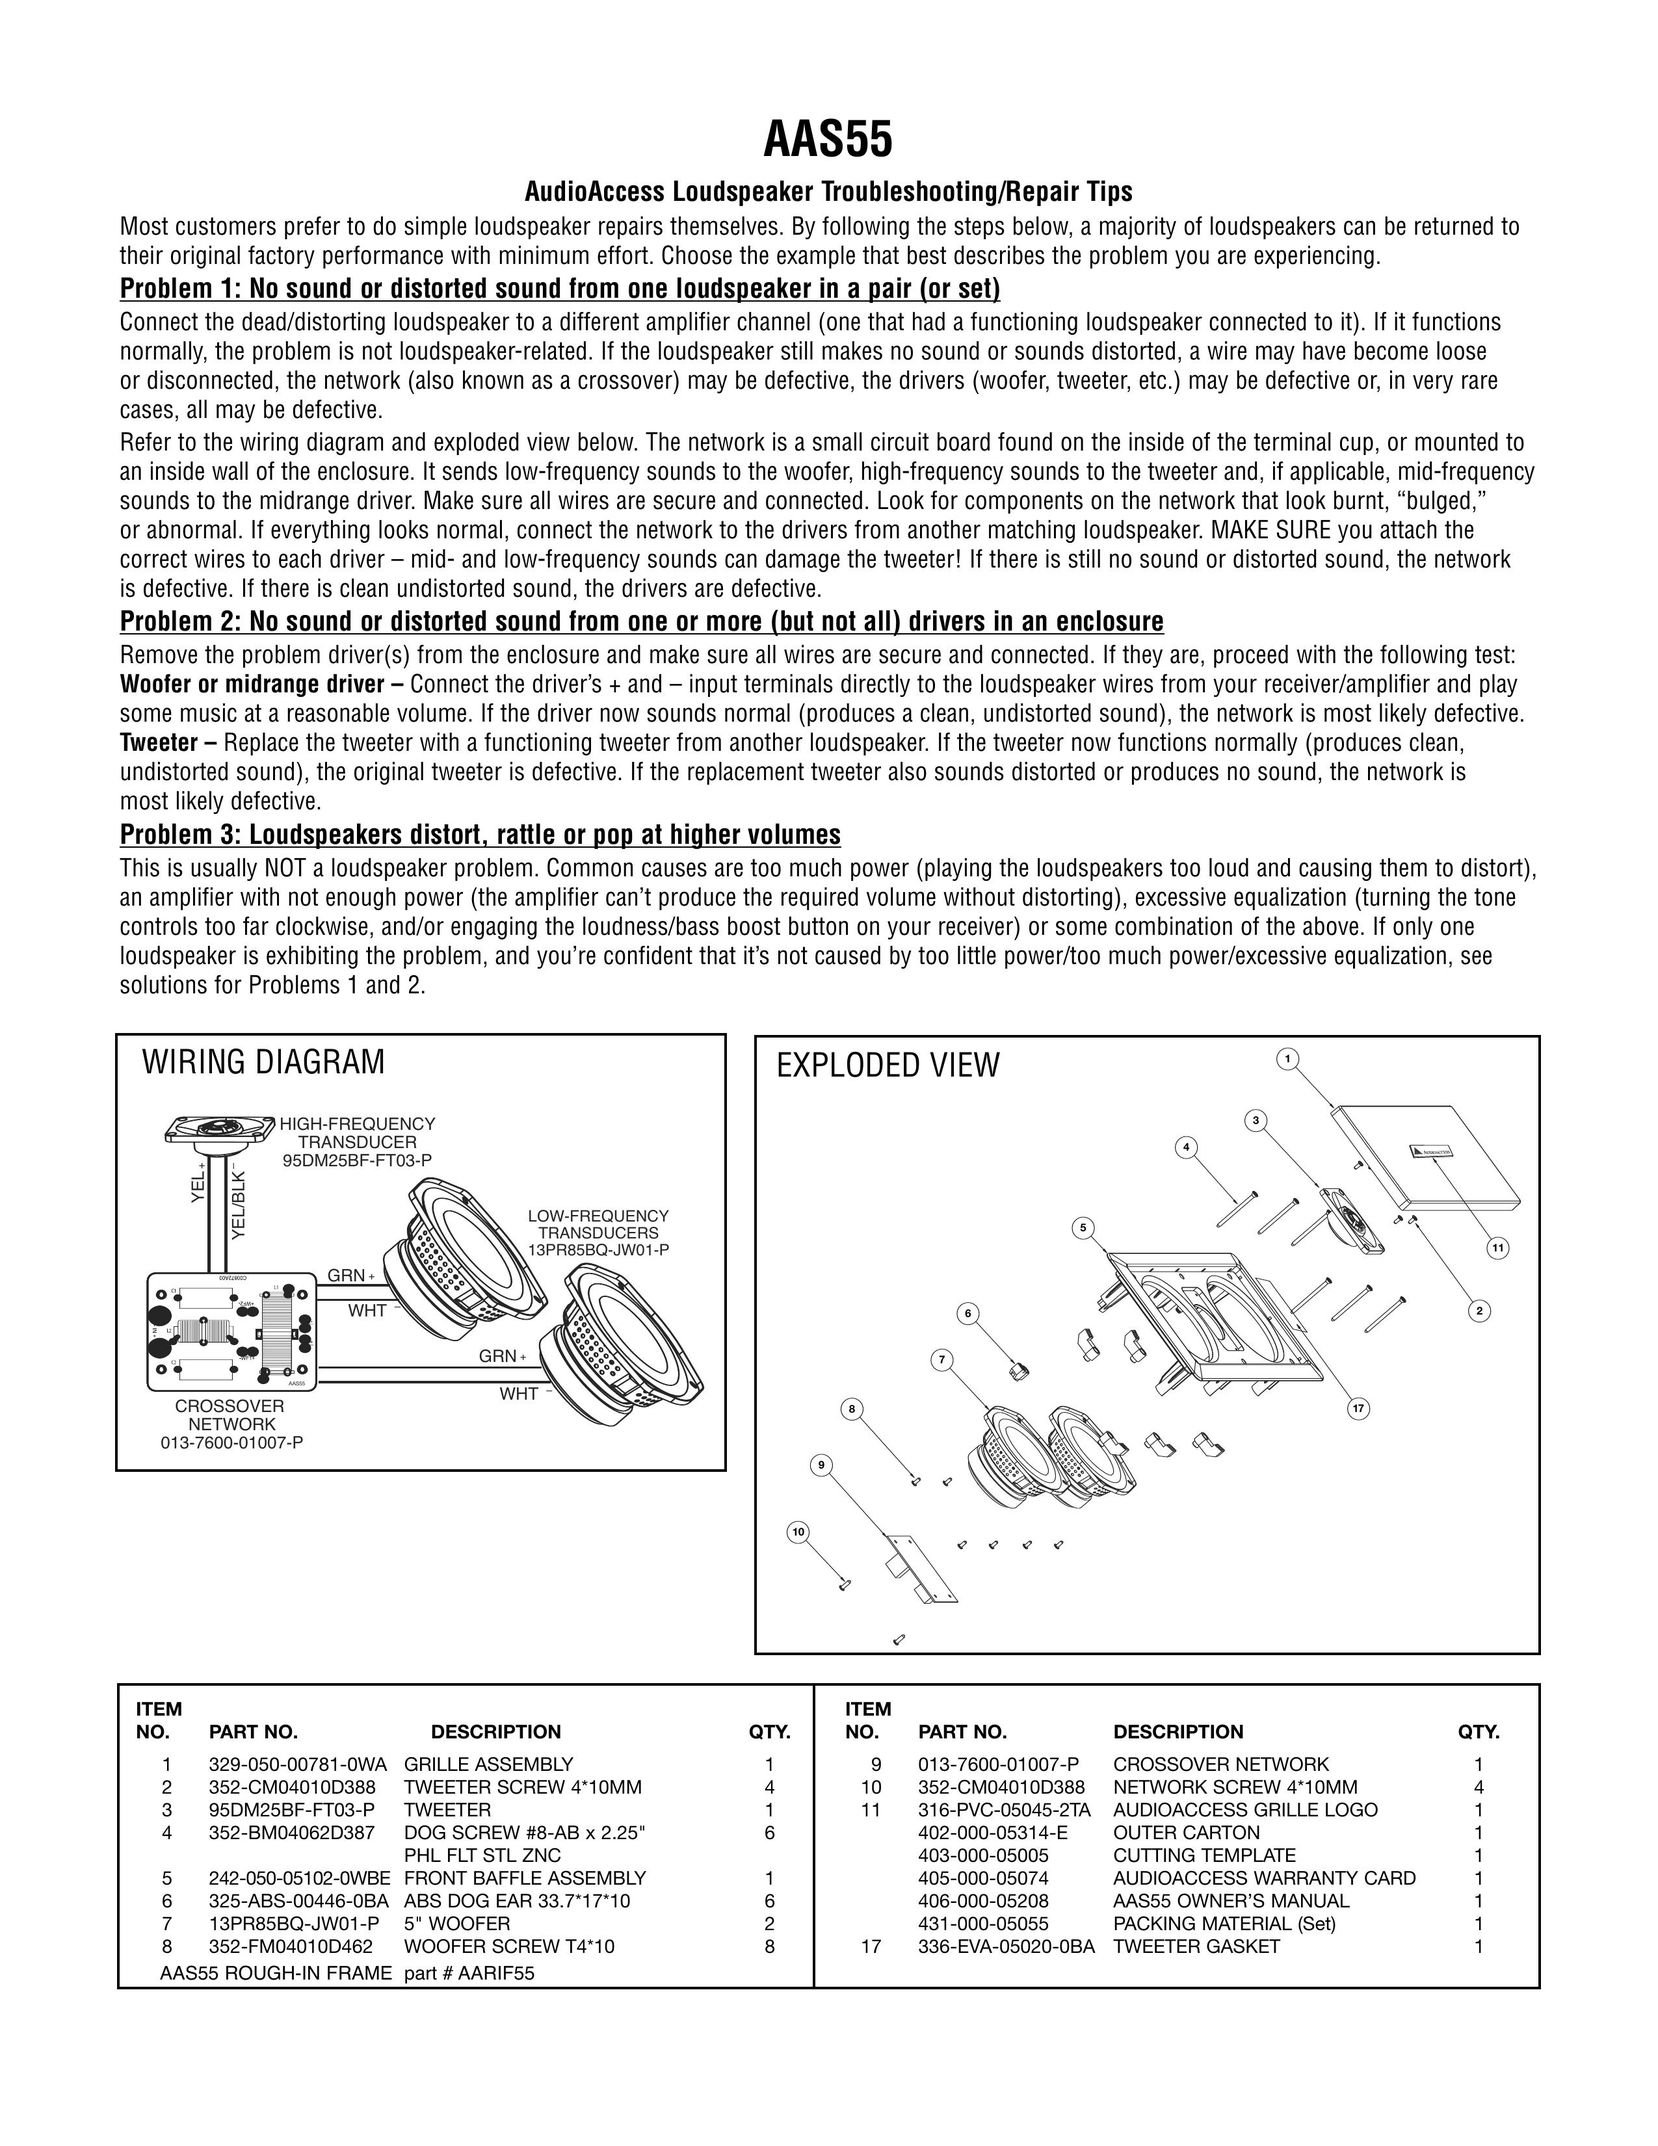 Audioaccess AAS55 Portable Speaker User Manual